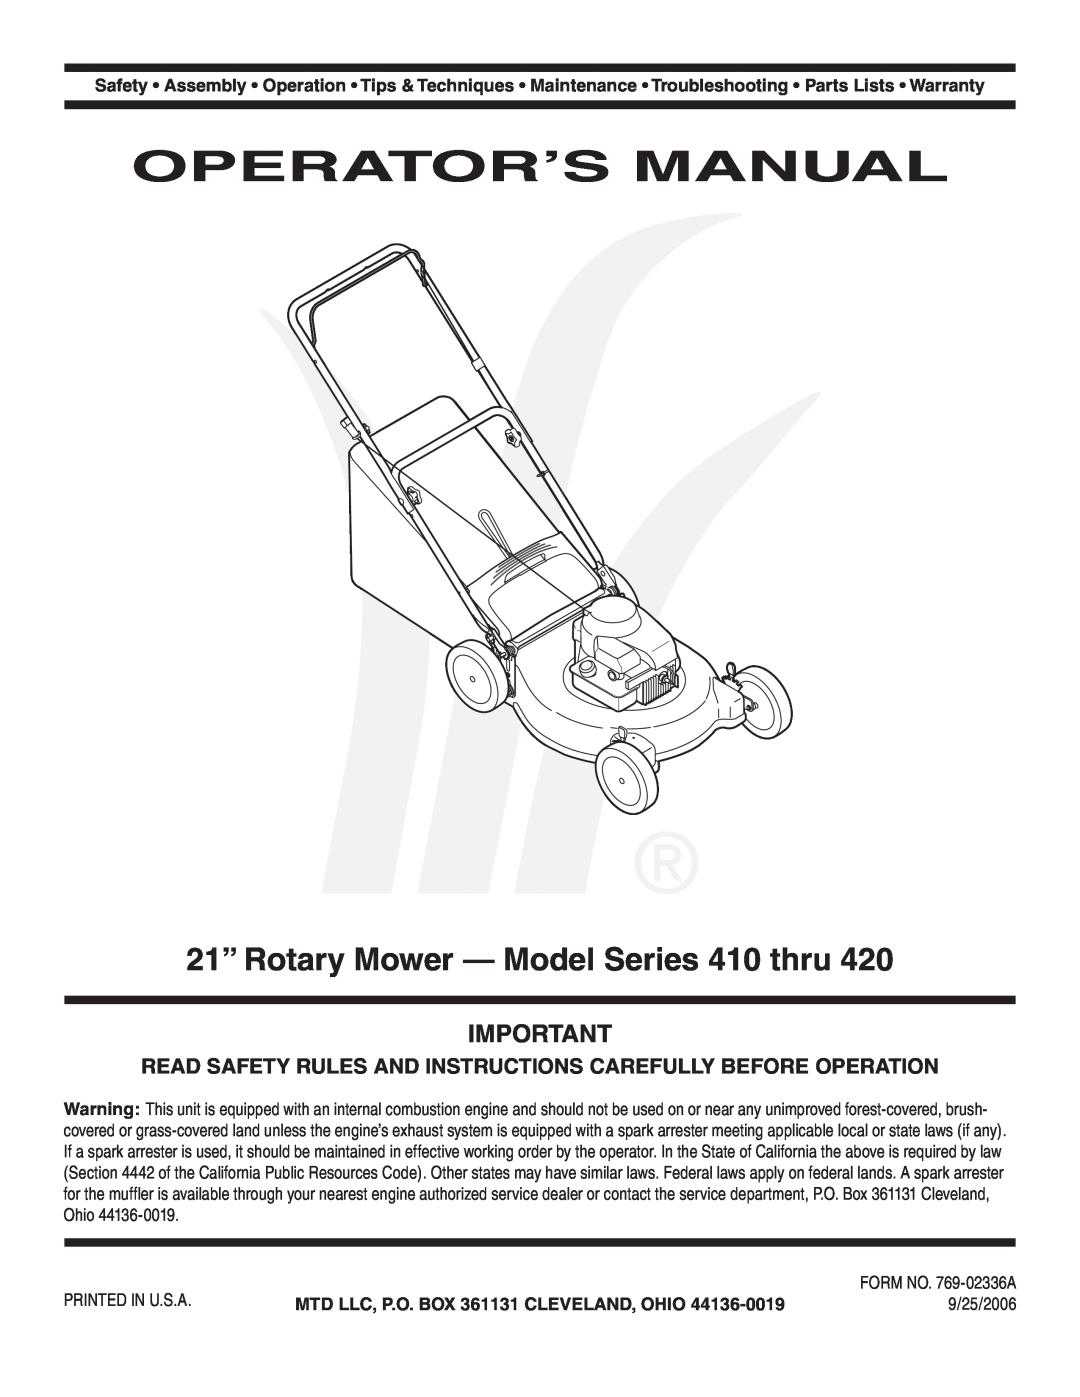 MTD Series 410 thru 420 warranty Operator’S Manual, 21” Rotary Mower - Model Series 410 thru 